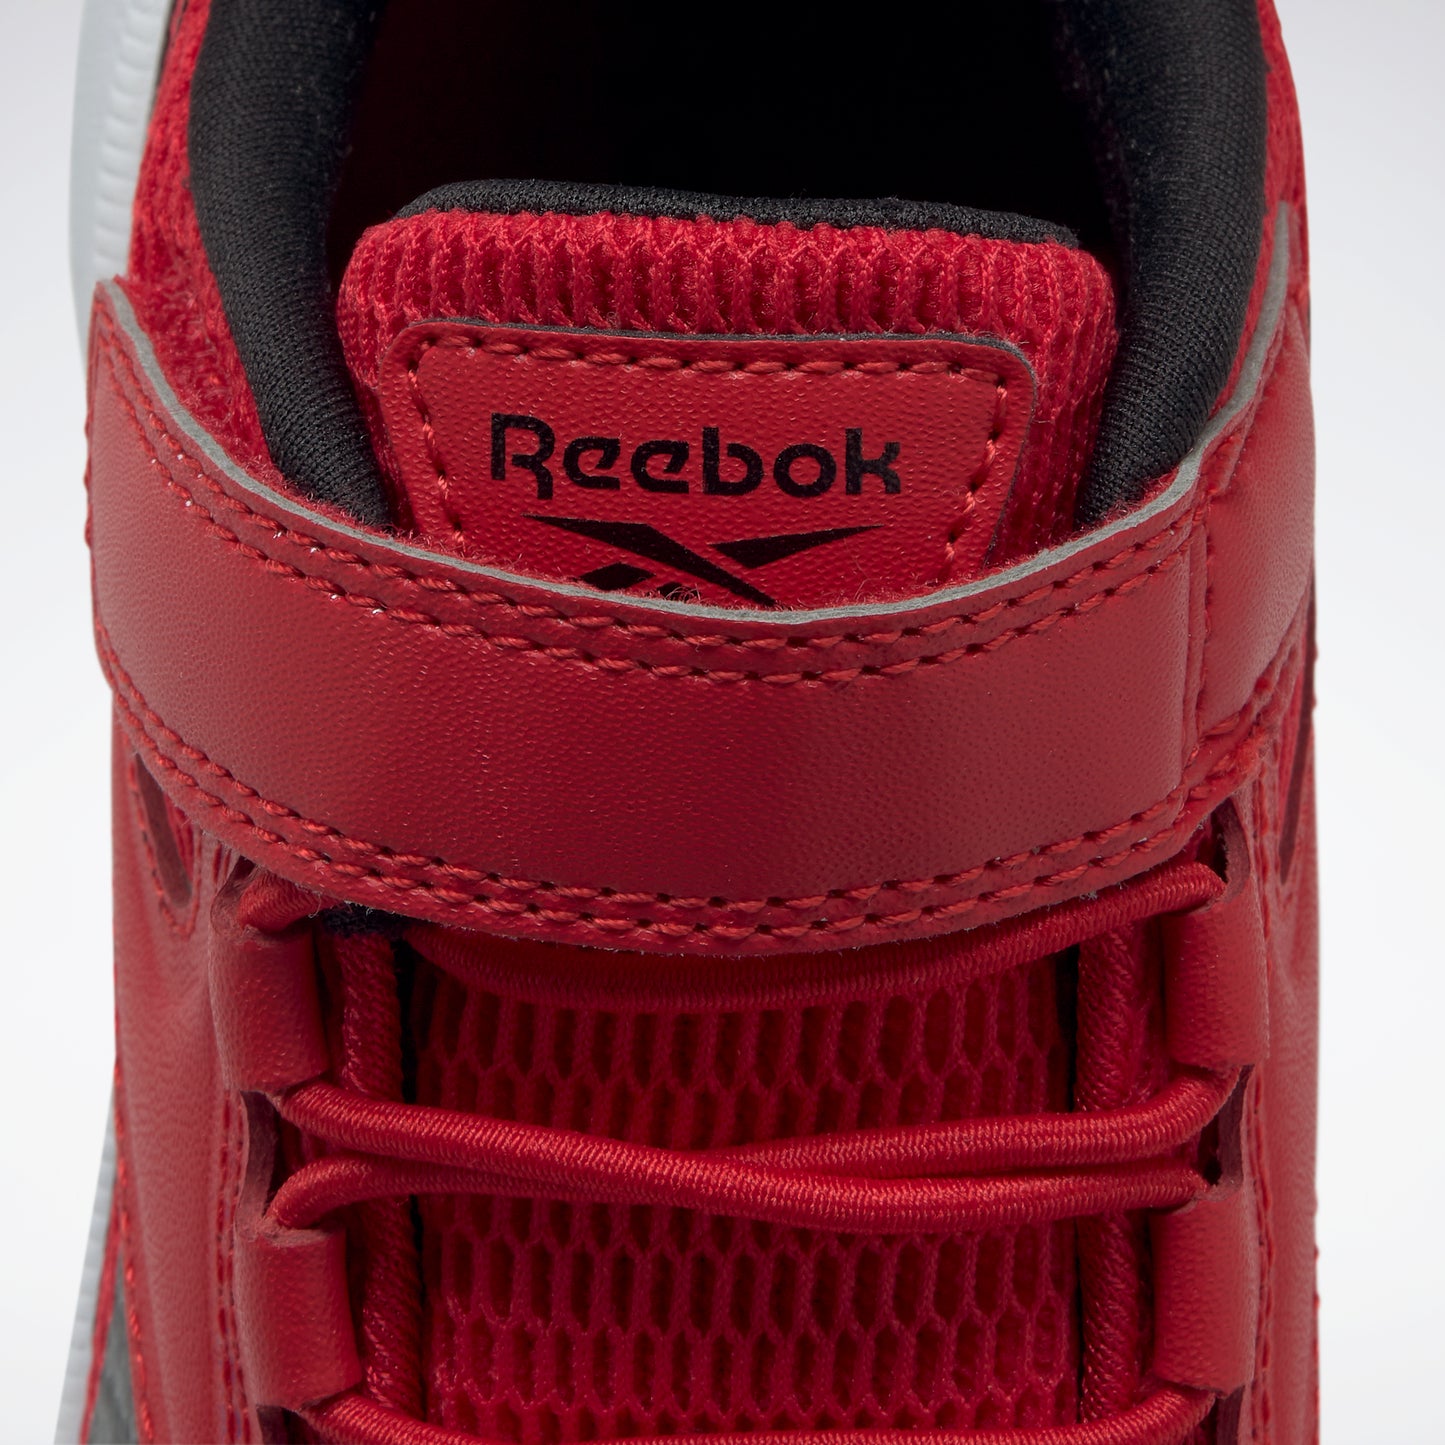 Reebok Footwear Kids Reebok Road Supreme 3 Shoes Child Vecred/Black/Ftwwht